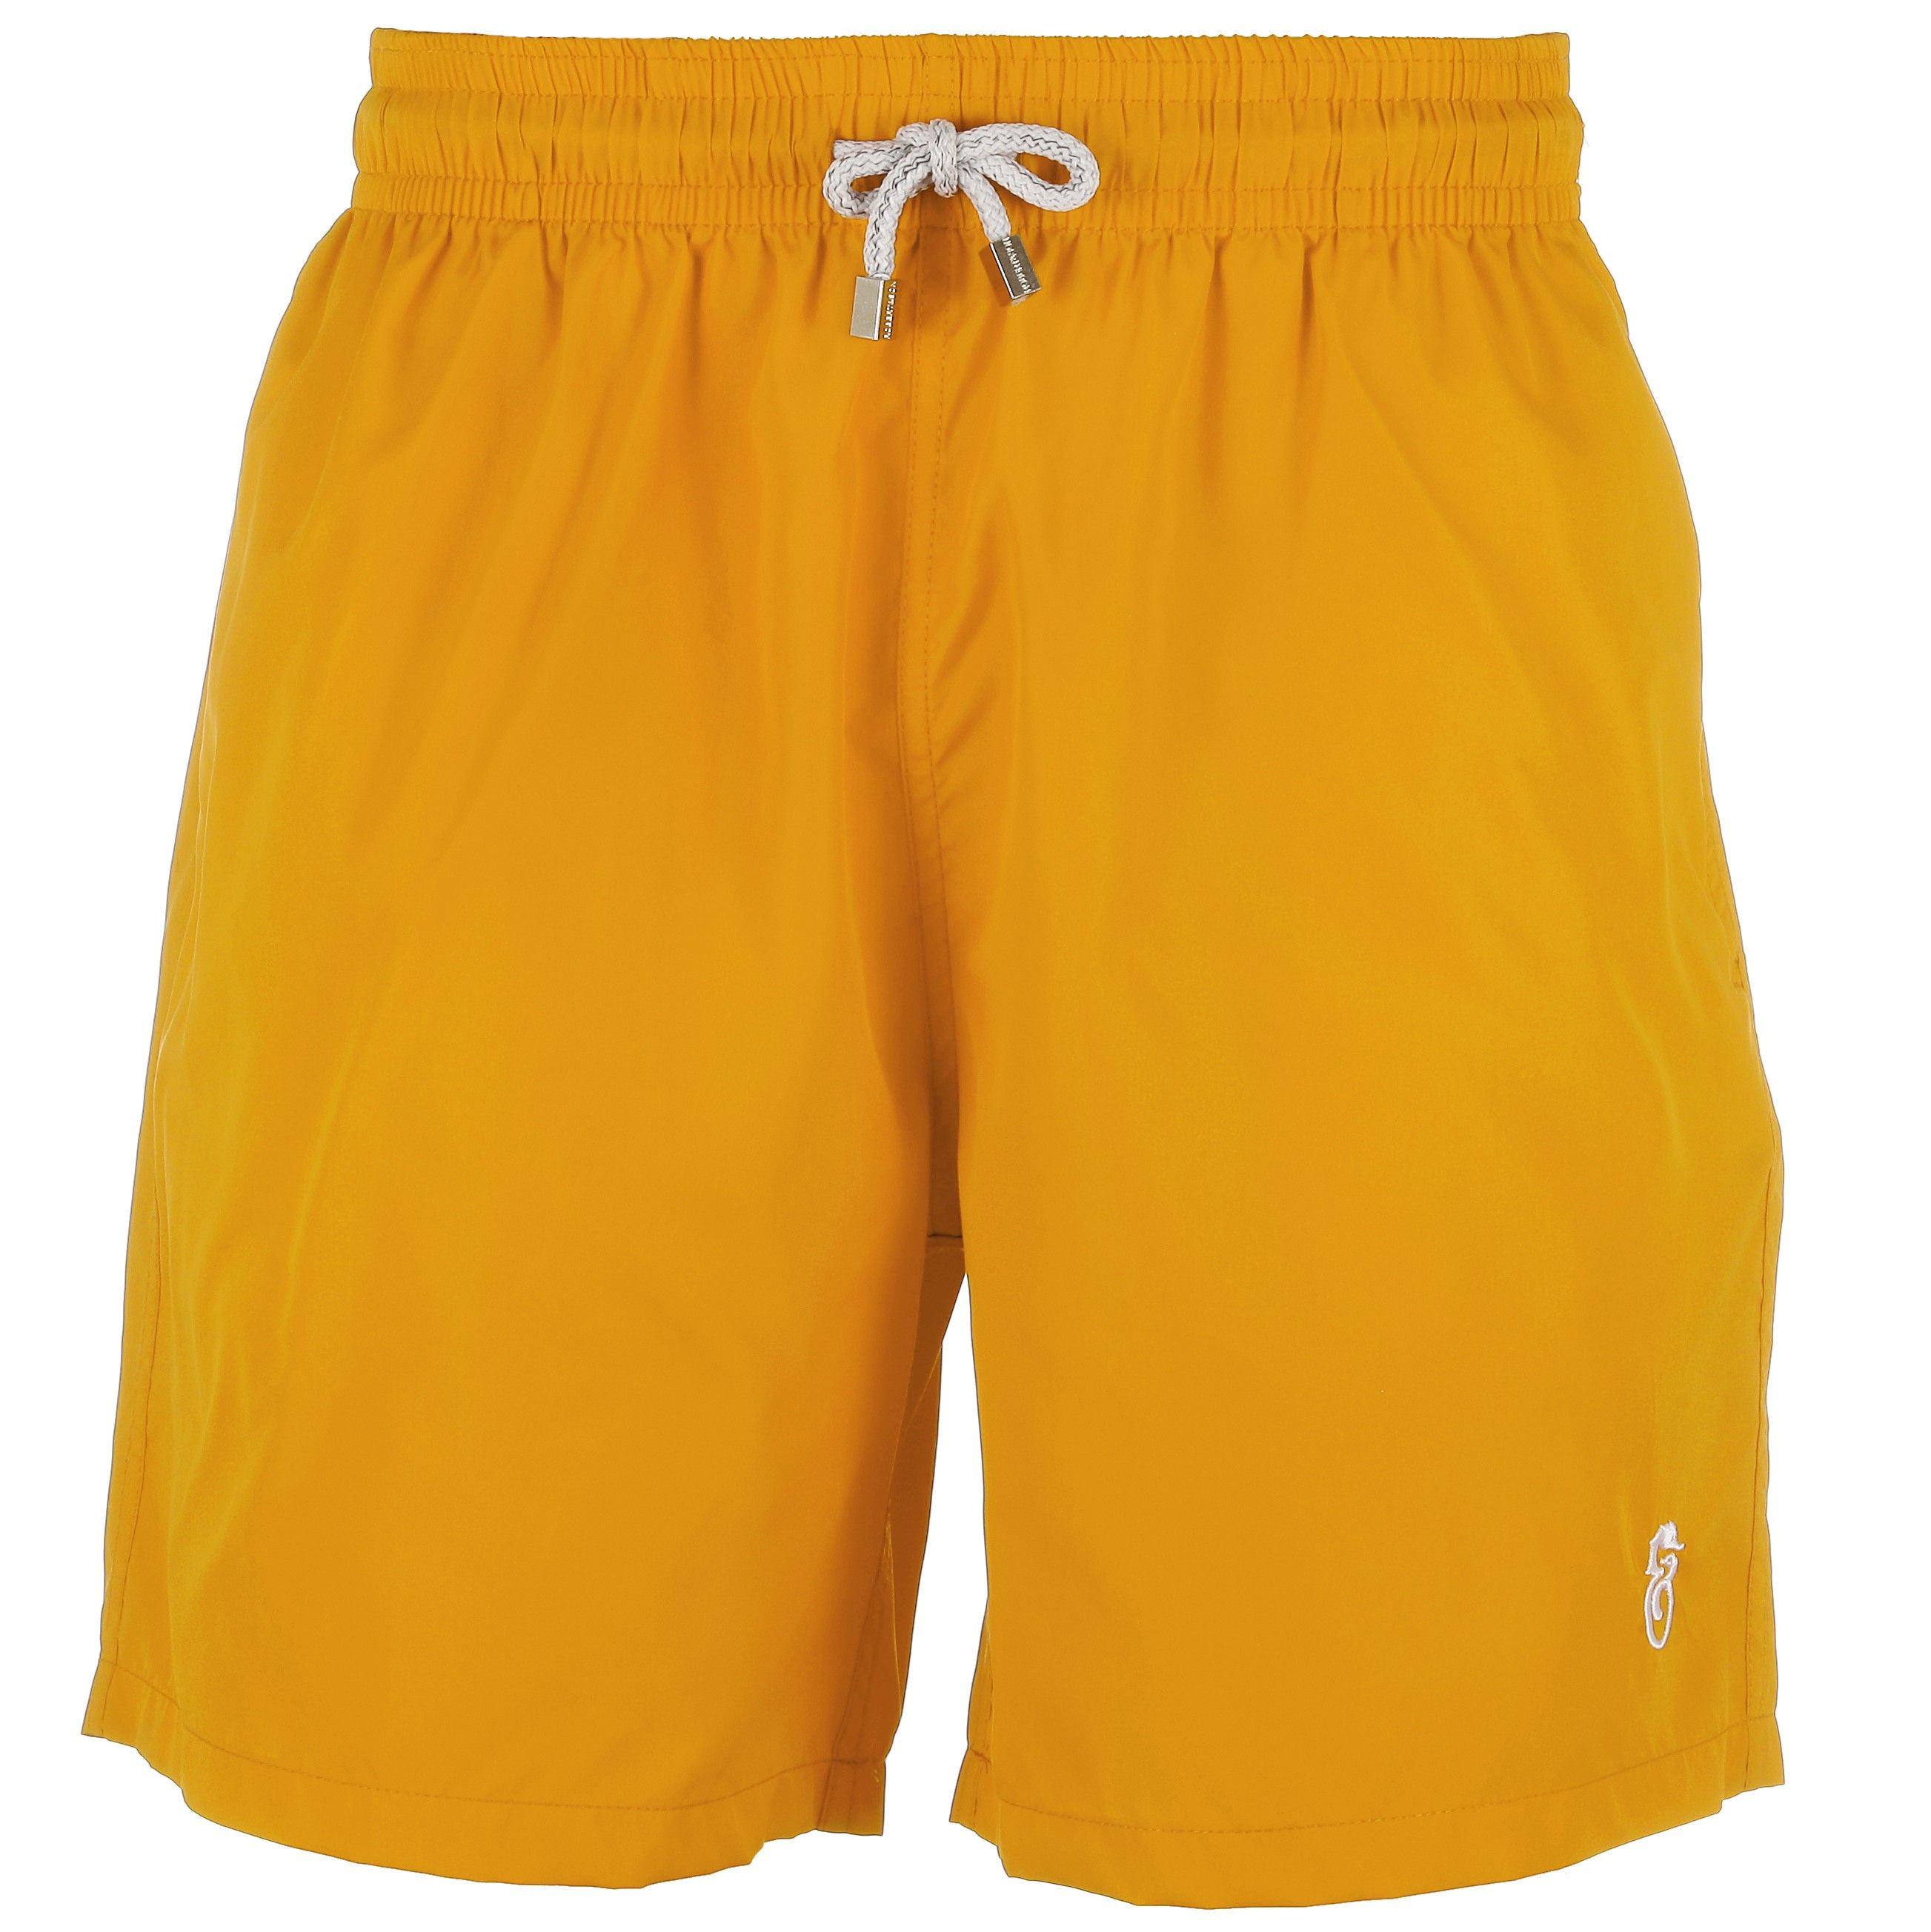 Men's Yellow Swim Shorts